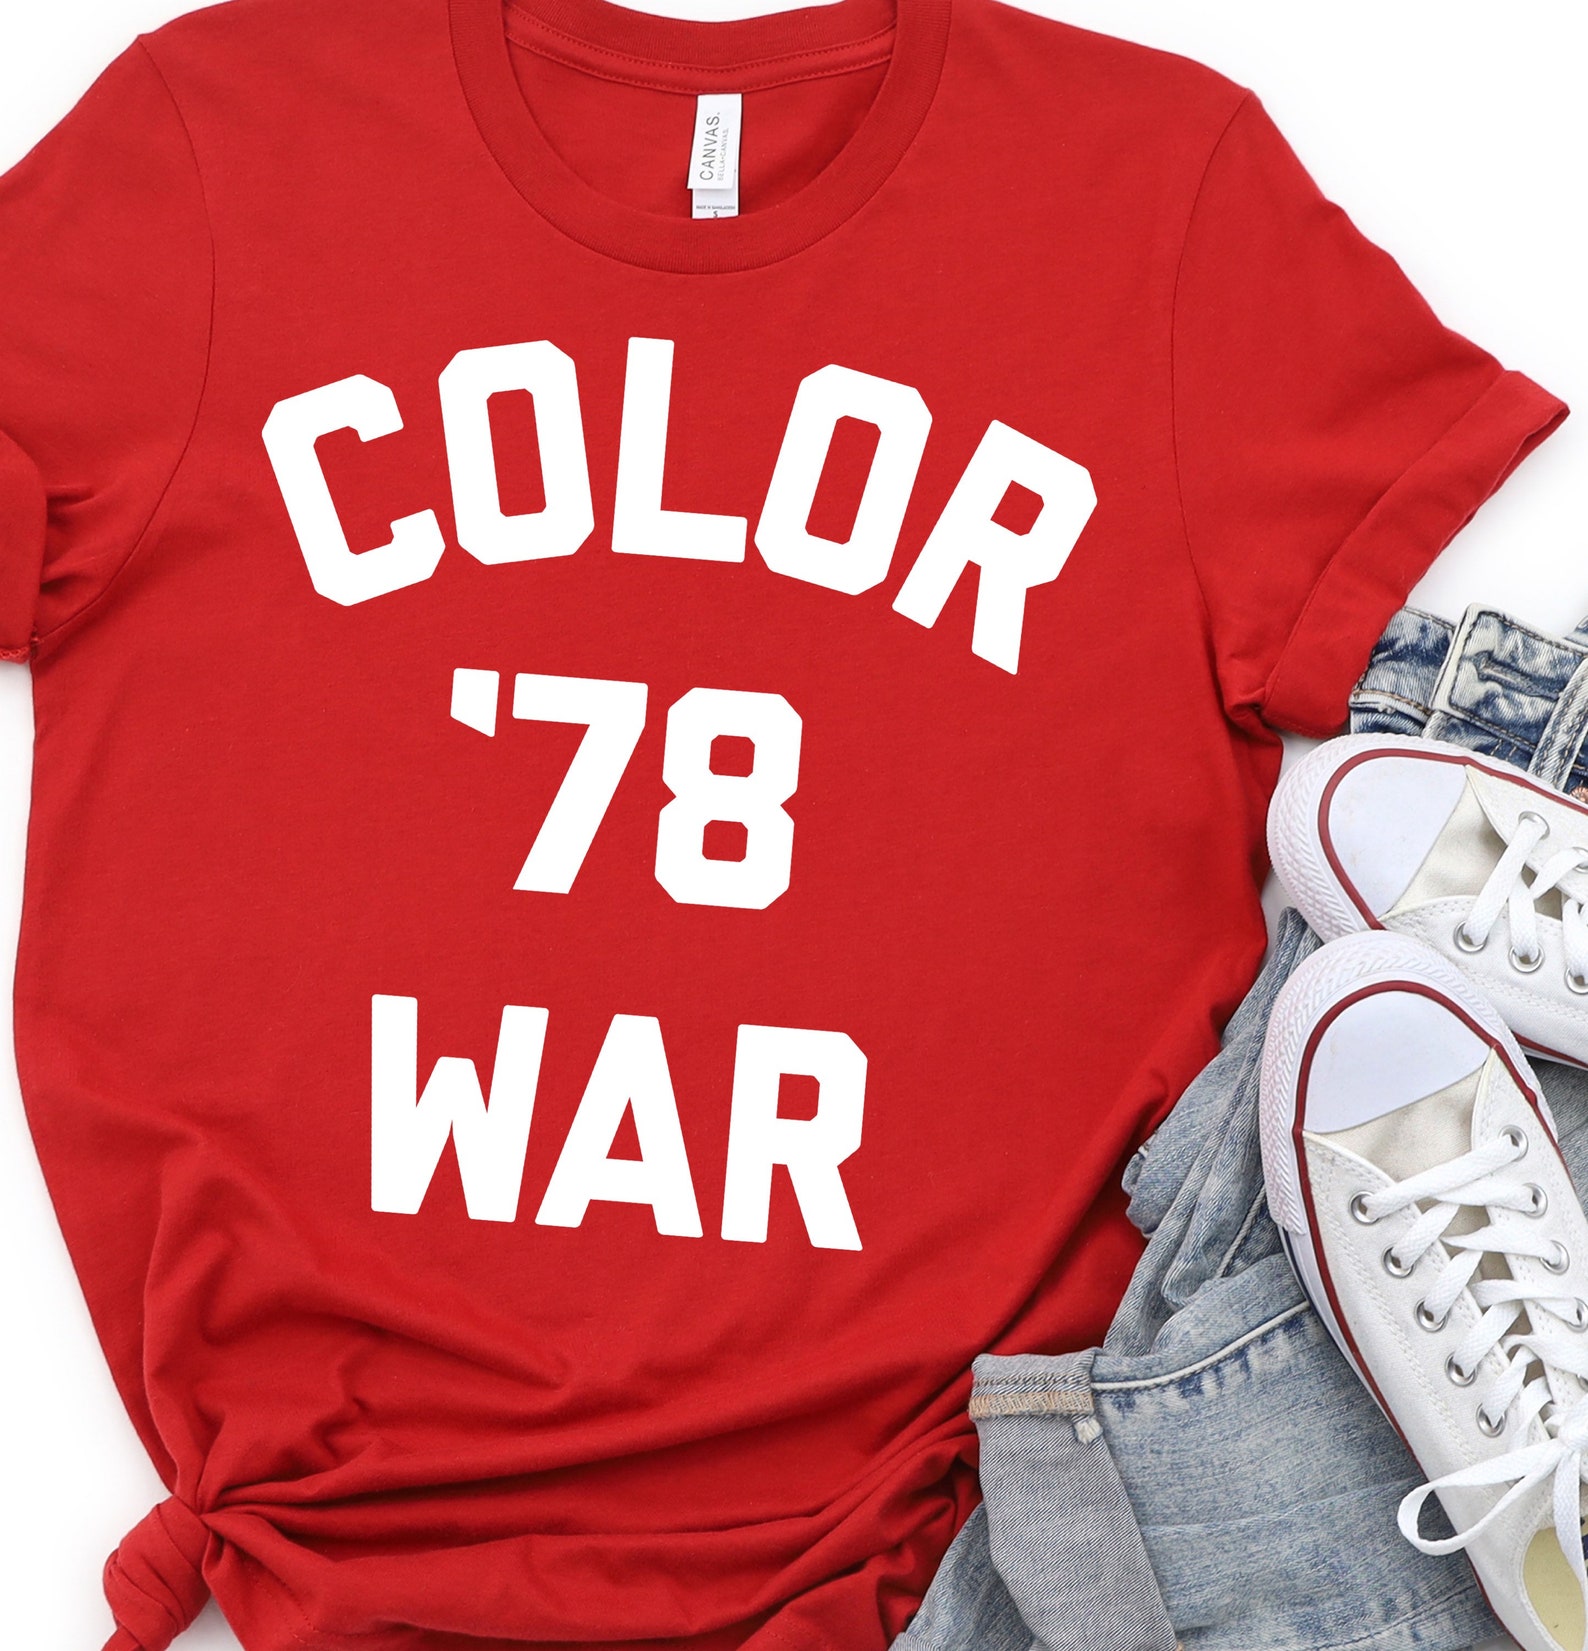 color war 78